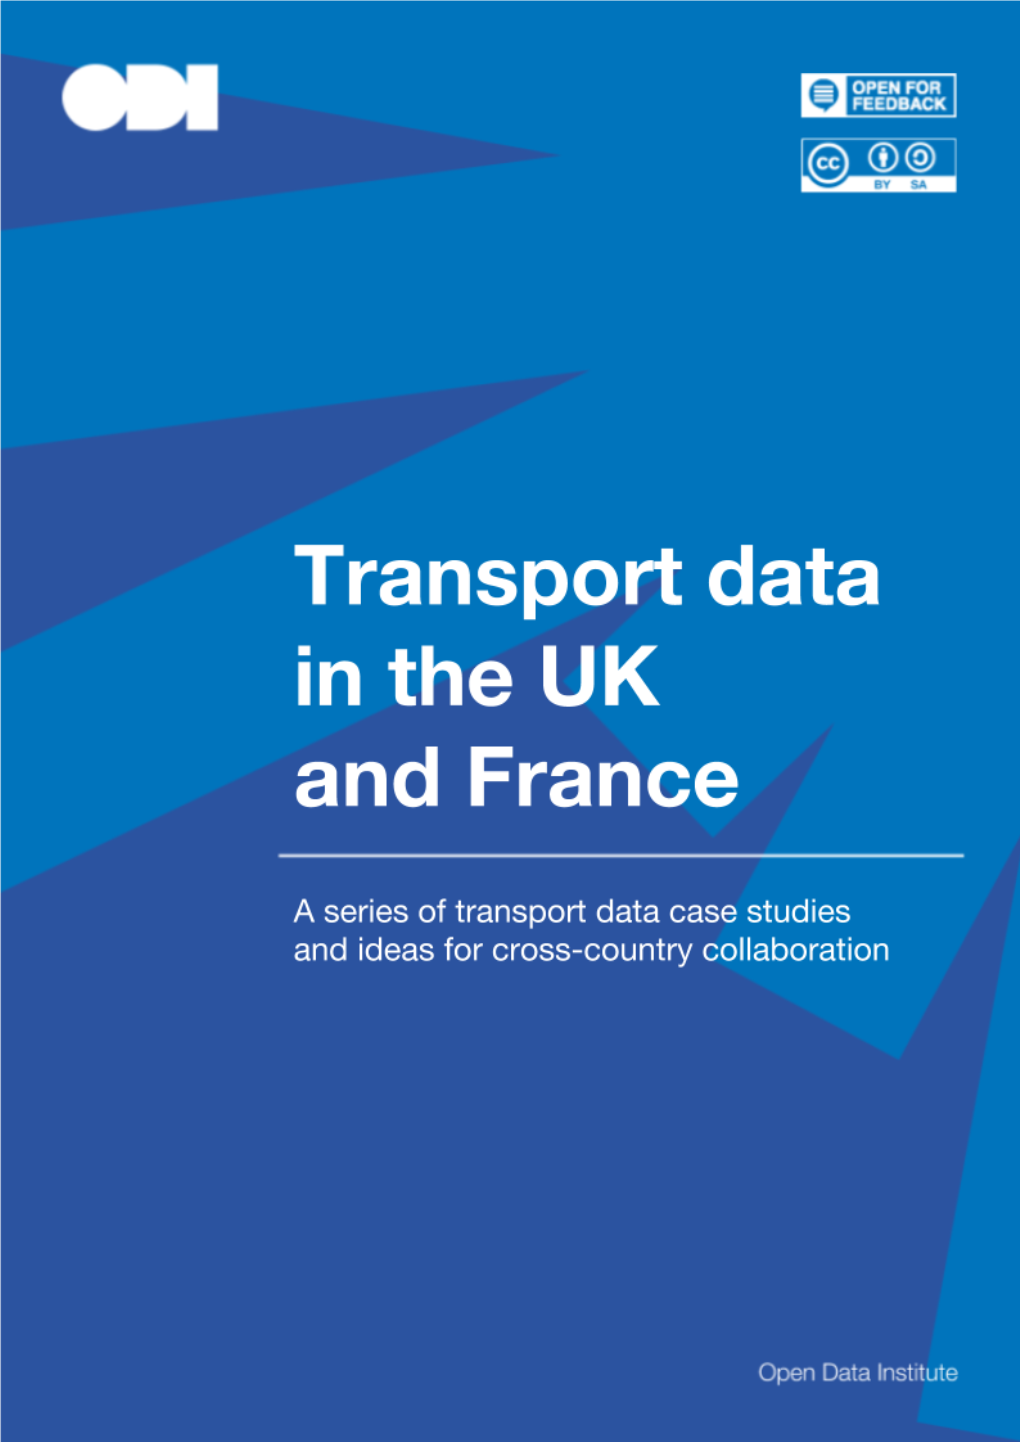 Transport Data Case Studies: UK 16